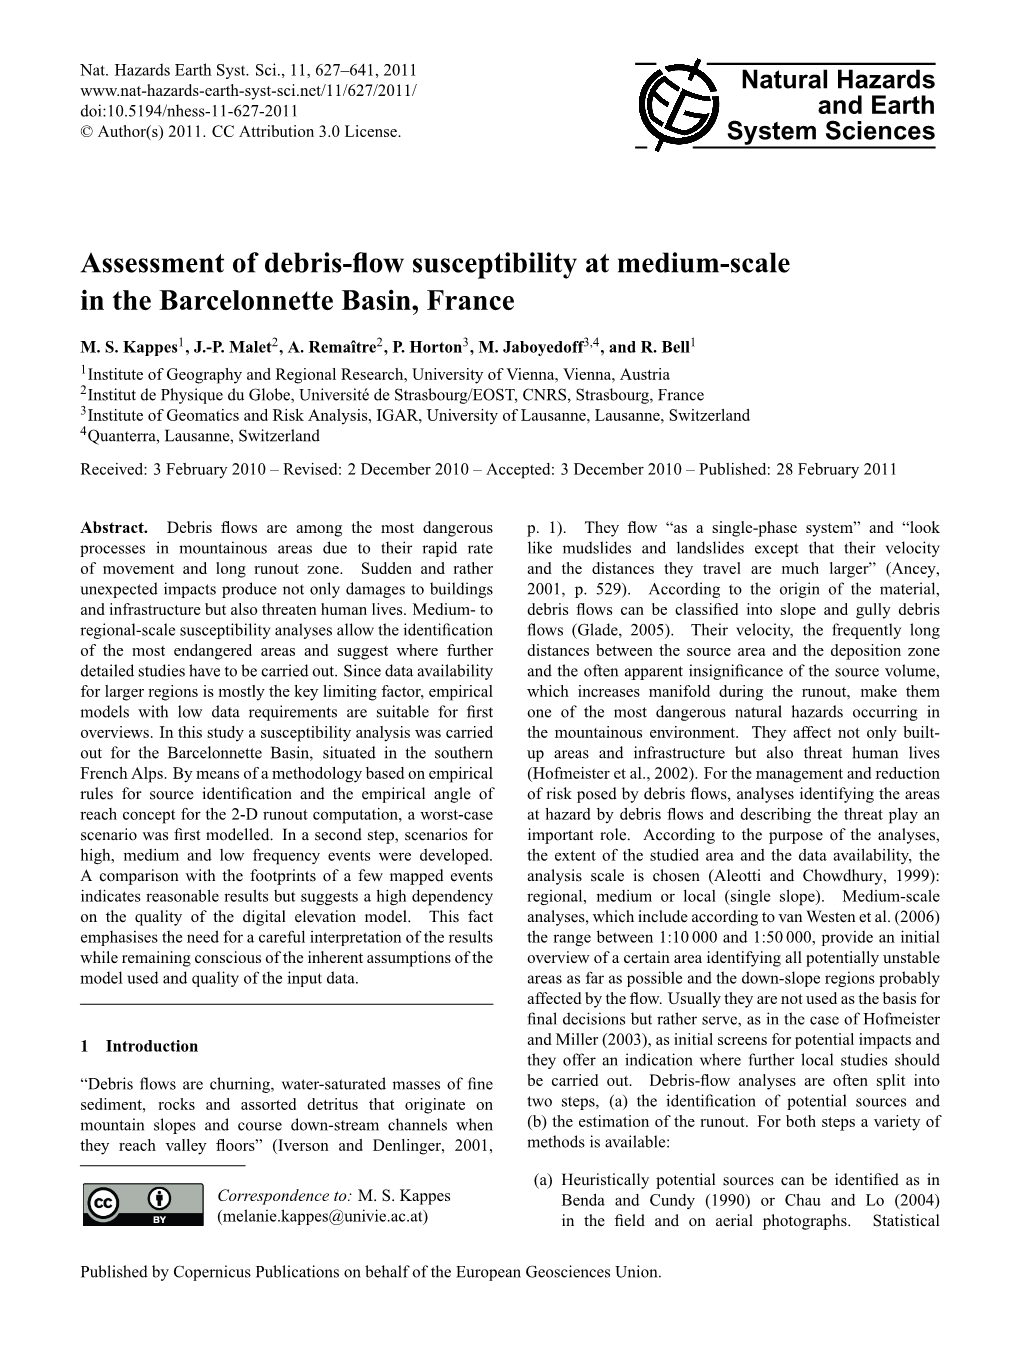 Assessment of Debris-Flow Susceptibility at Medium-Scale In